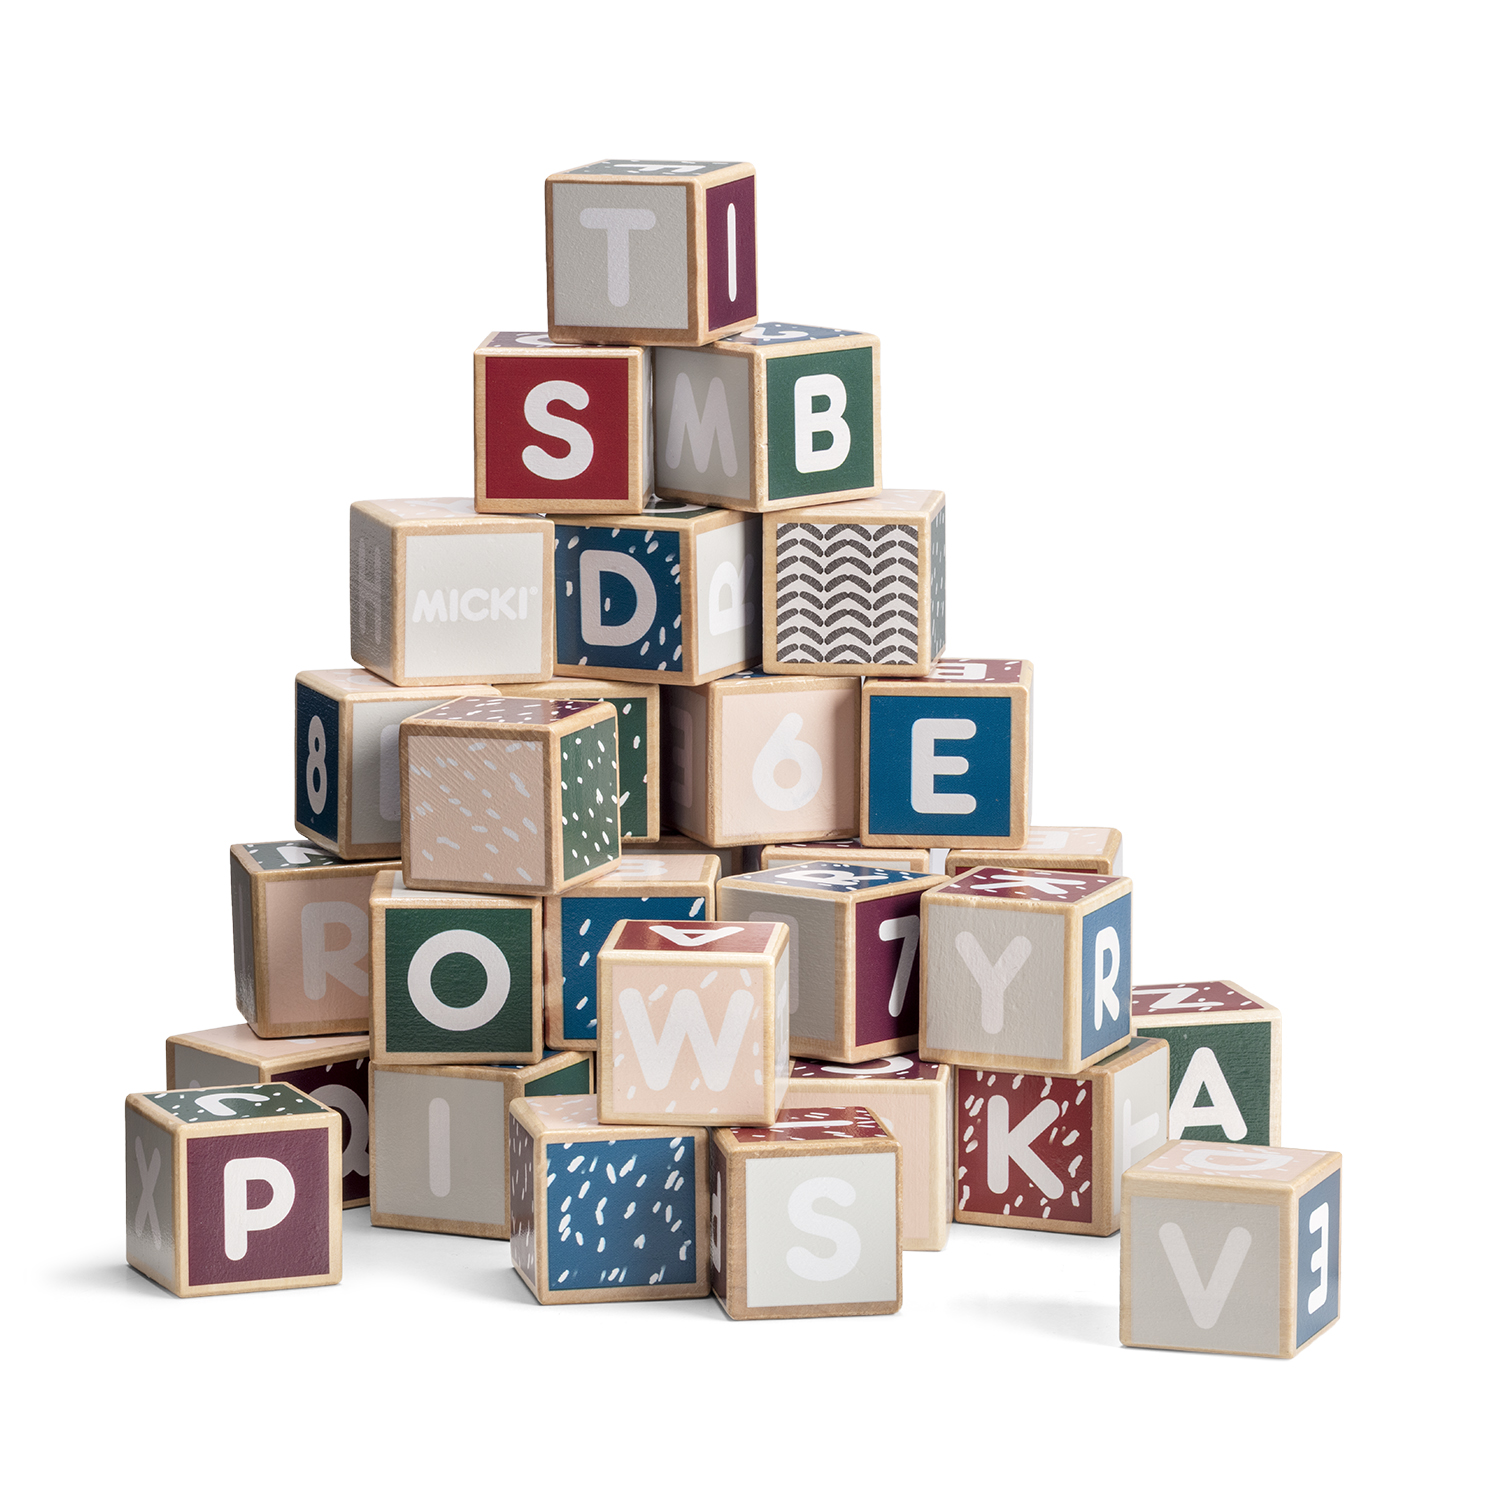 Wooden toys micki decorative letter blocks 36 pieces